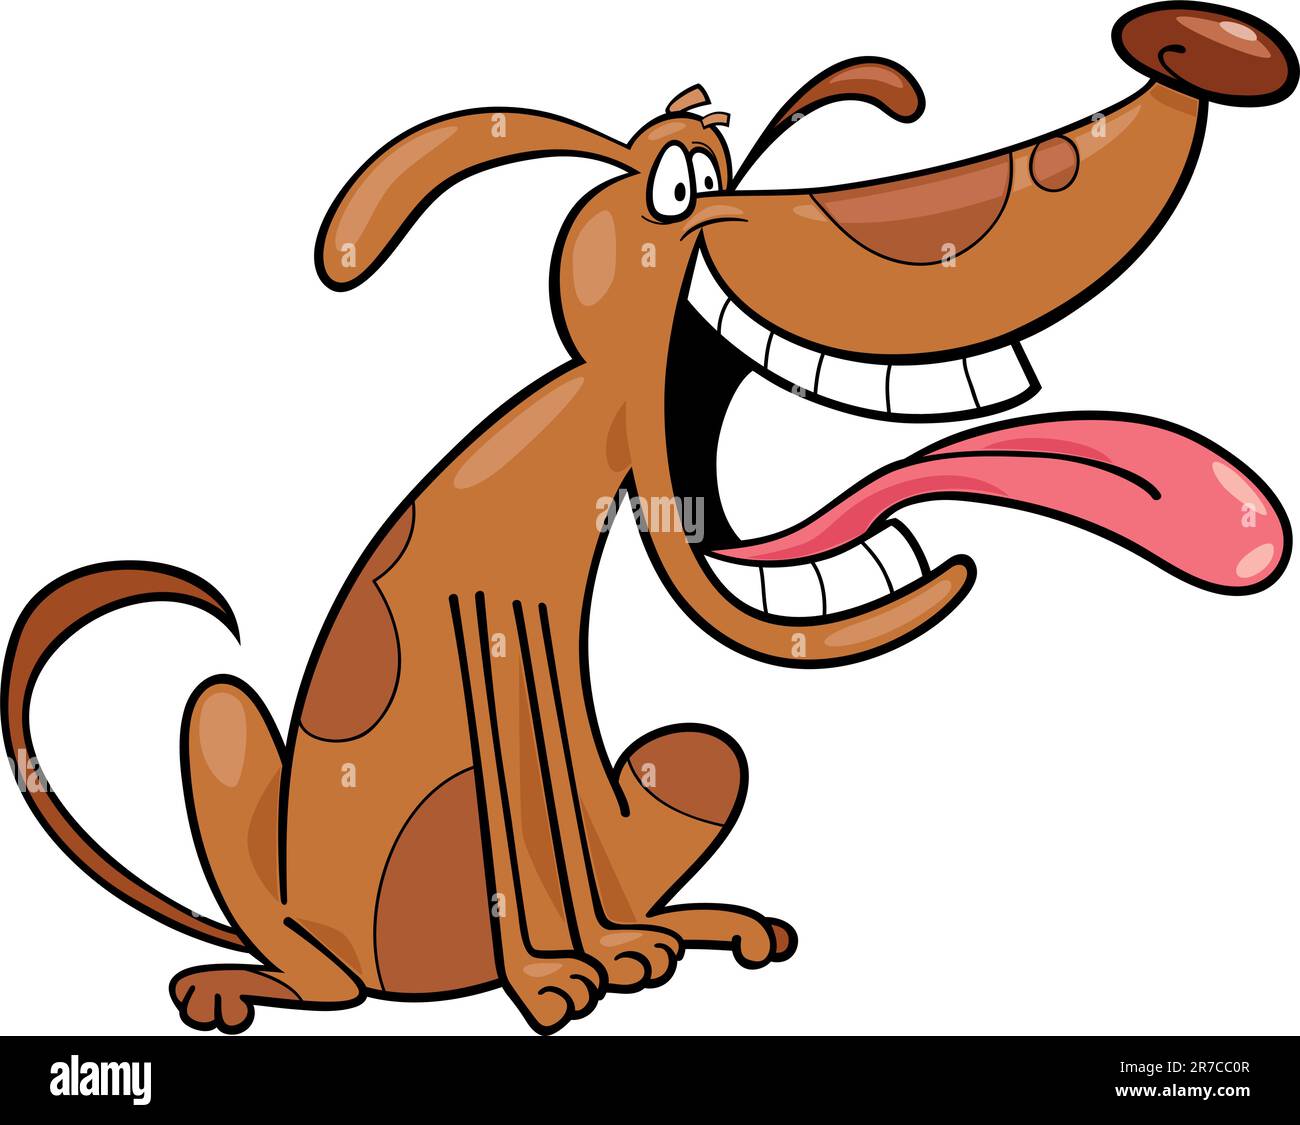 Cartoon illustration of happy dog Stock Vector